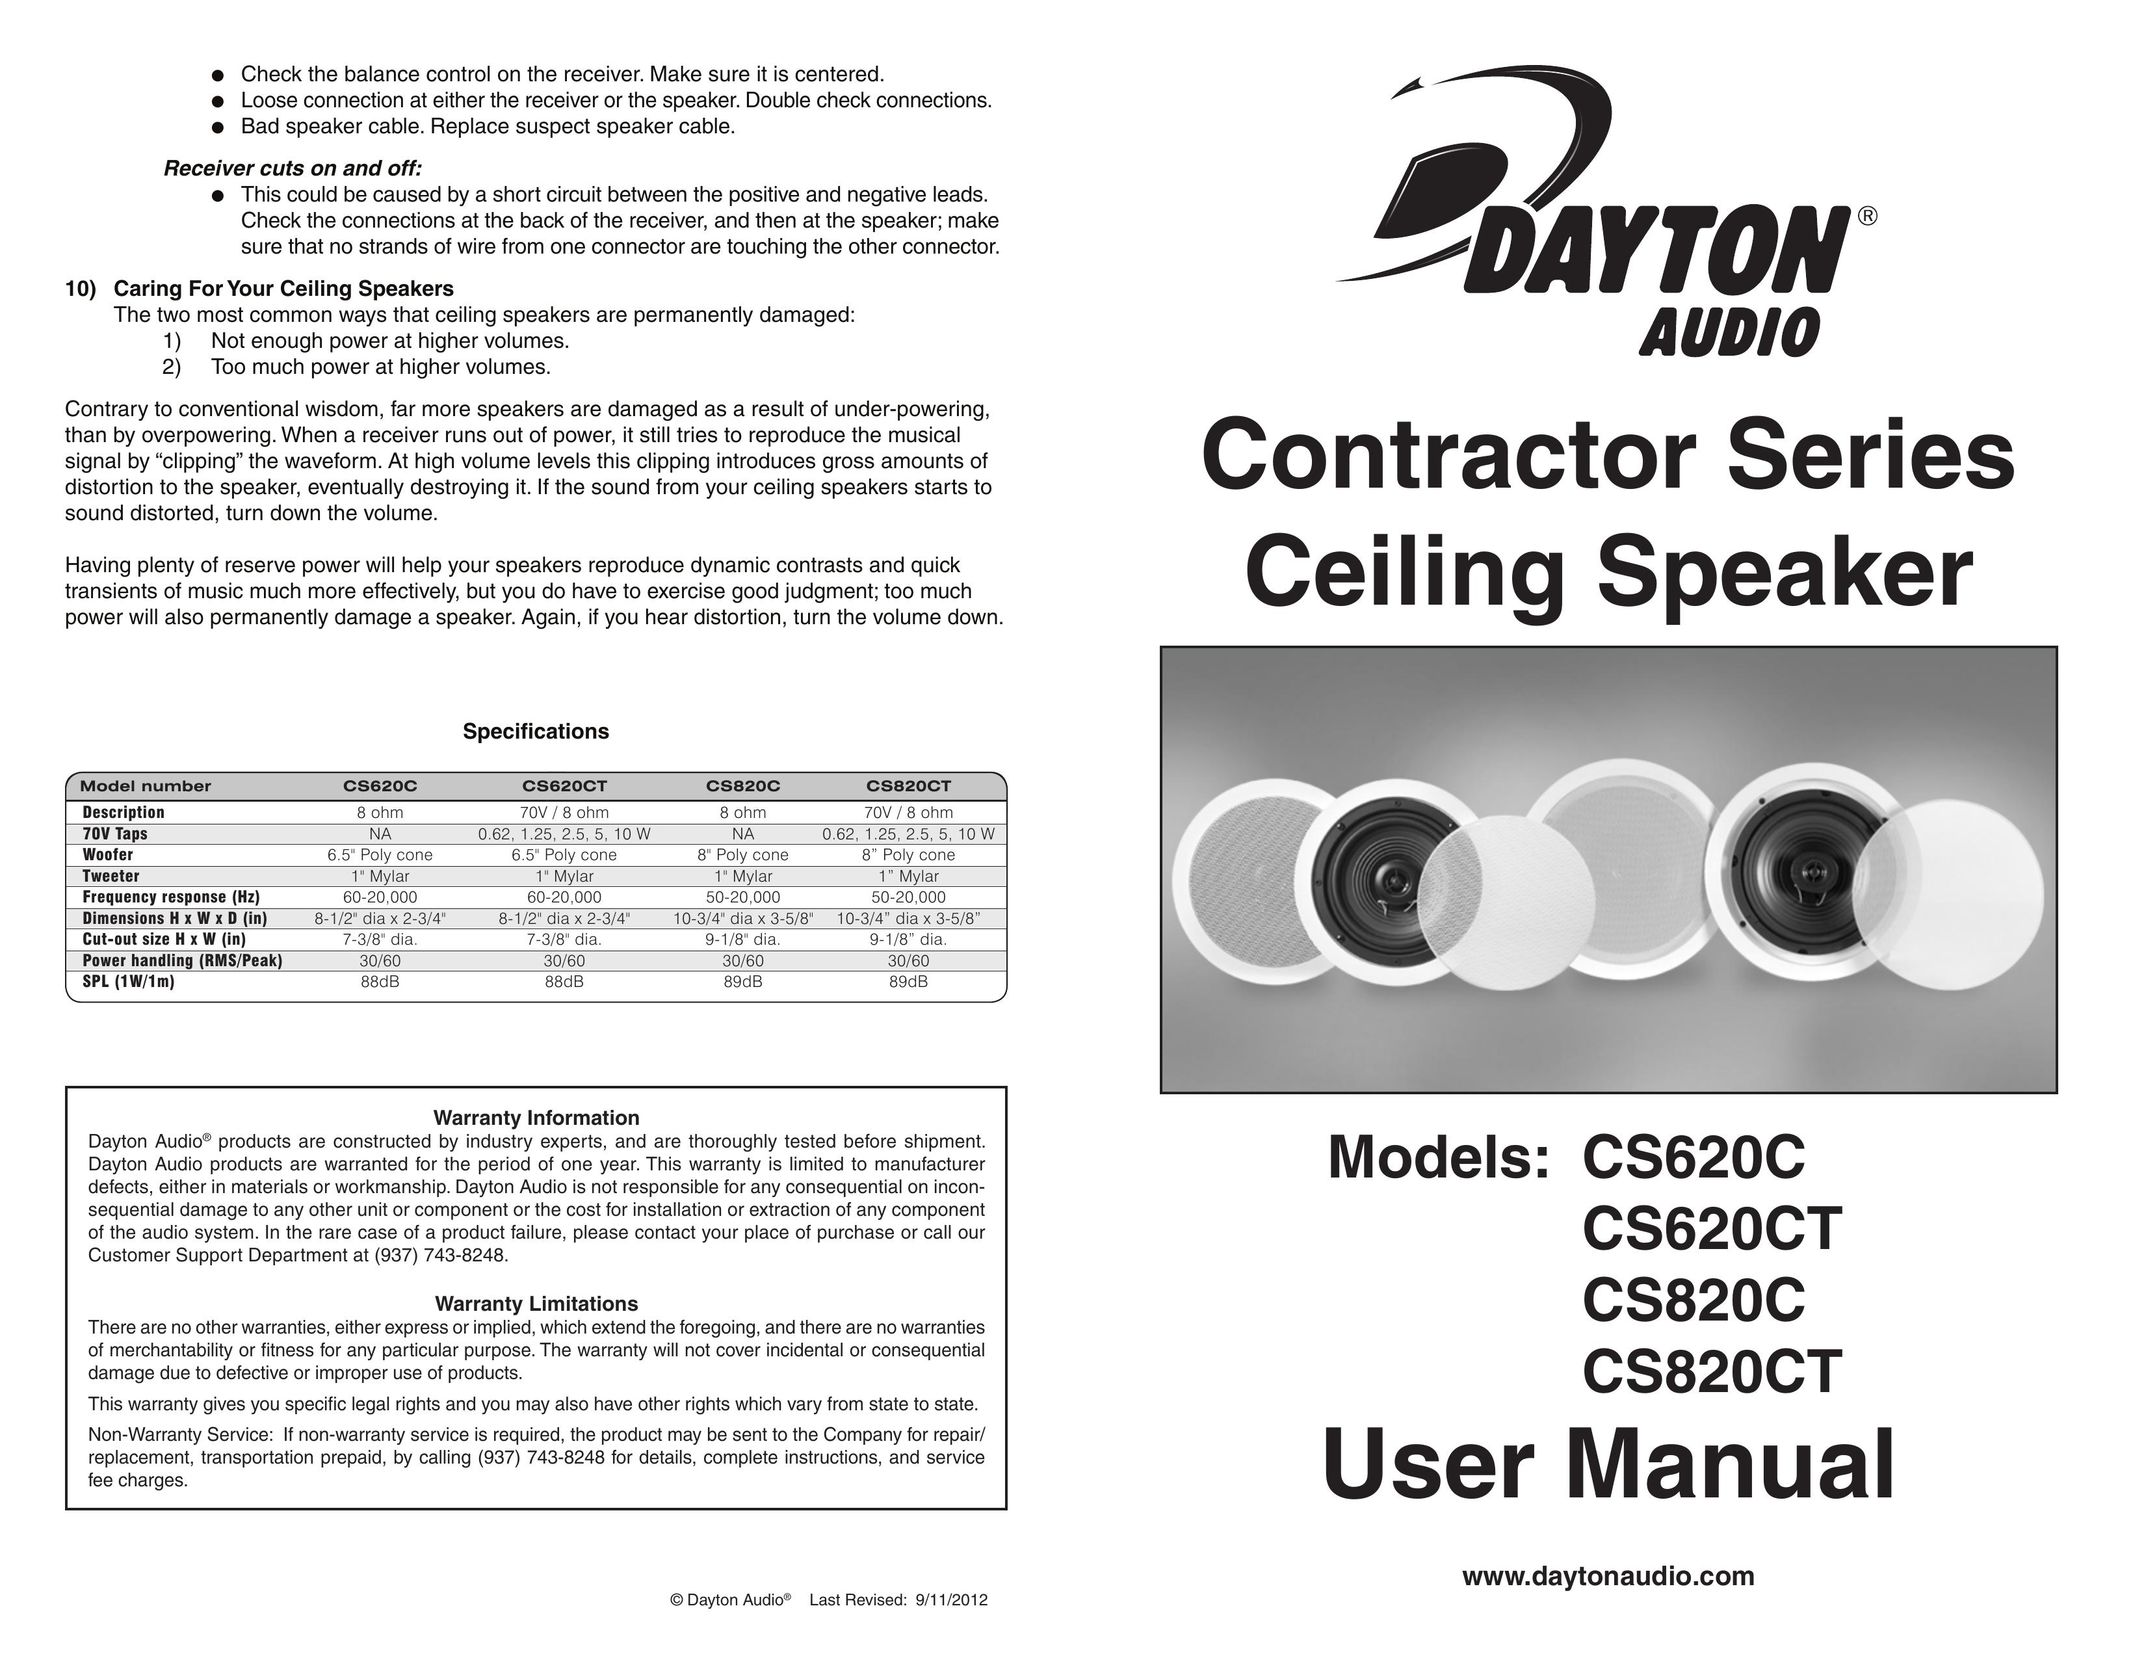 Dayton Audio CS820CT Speaker User Manual